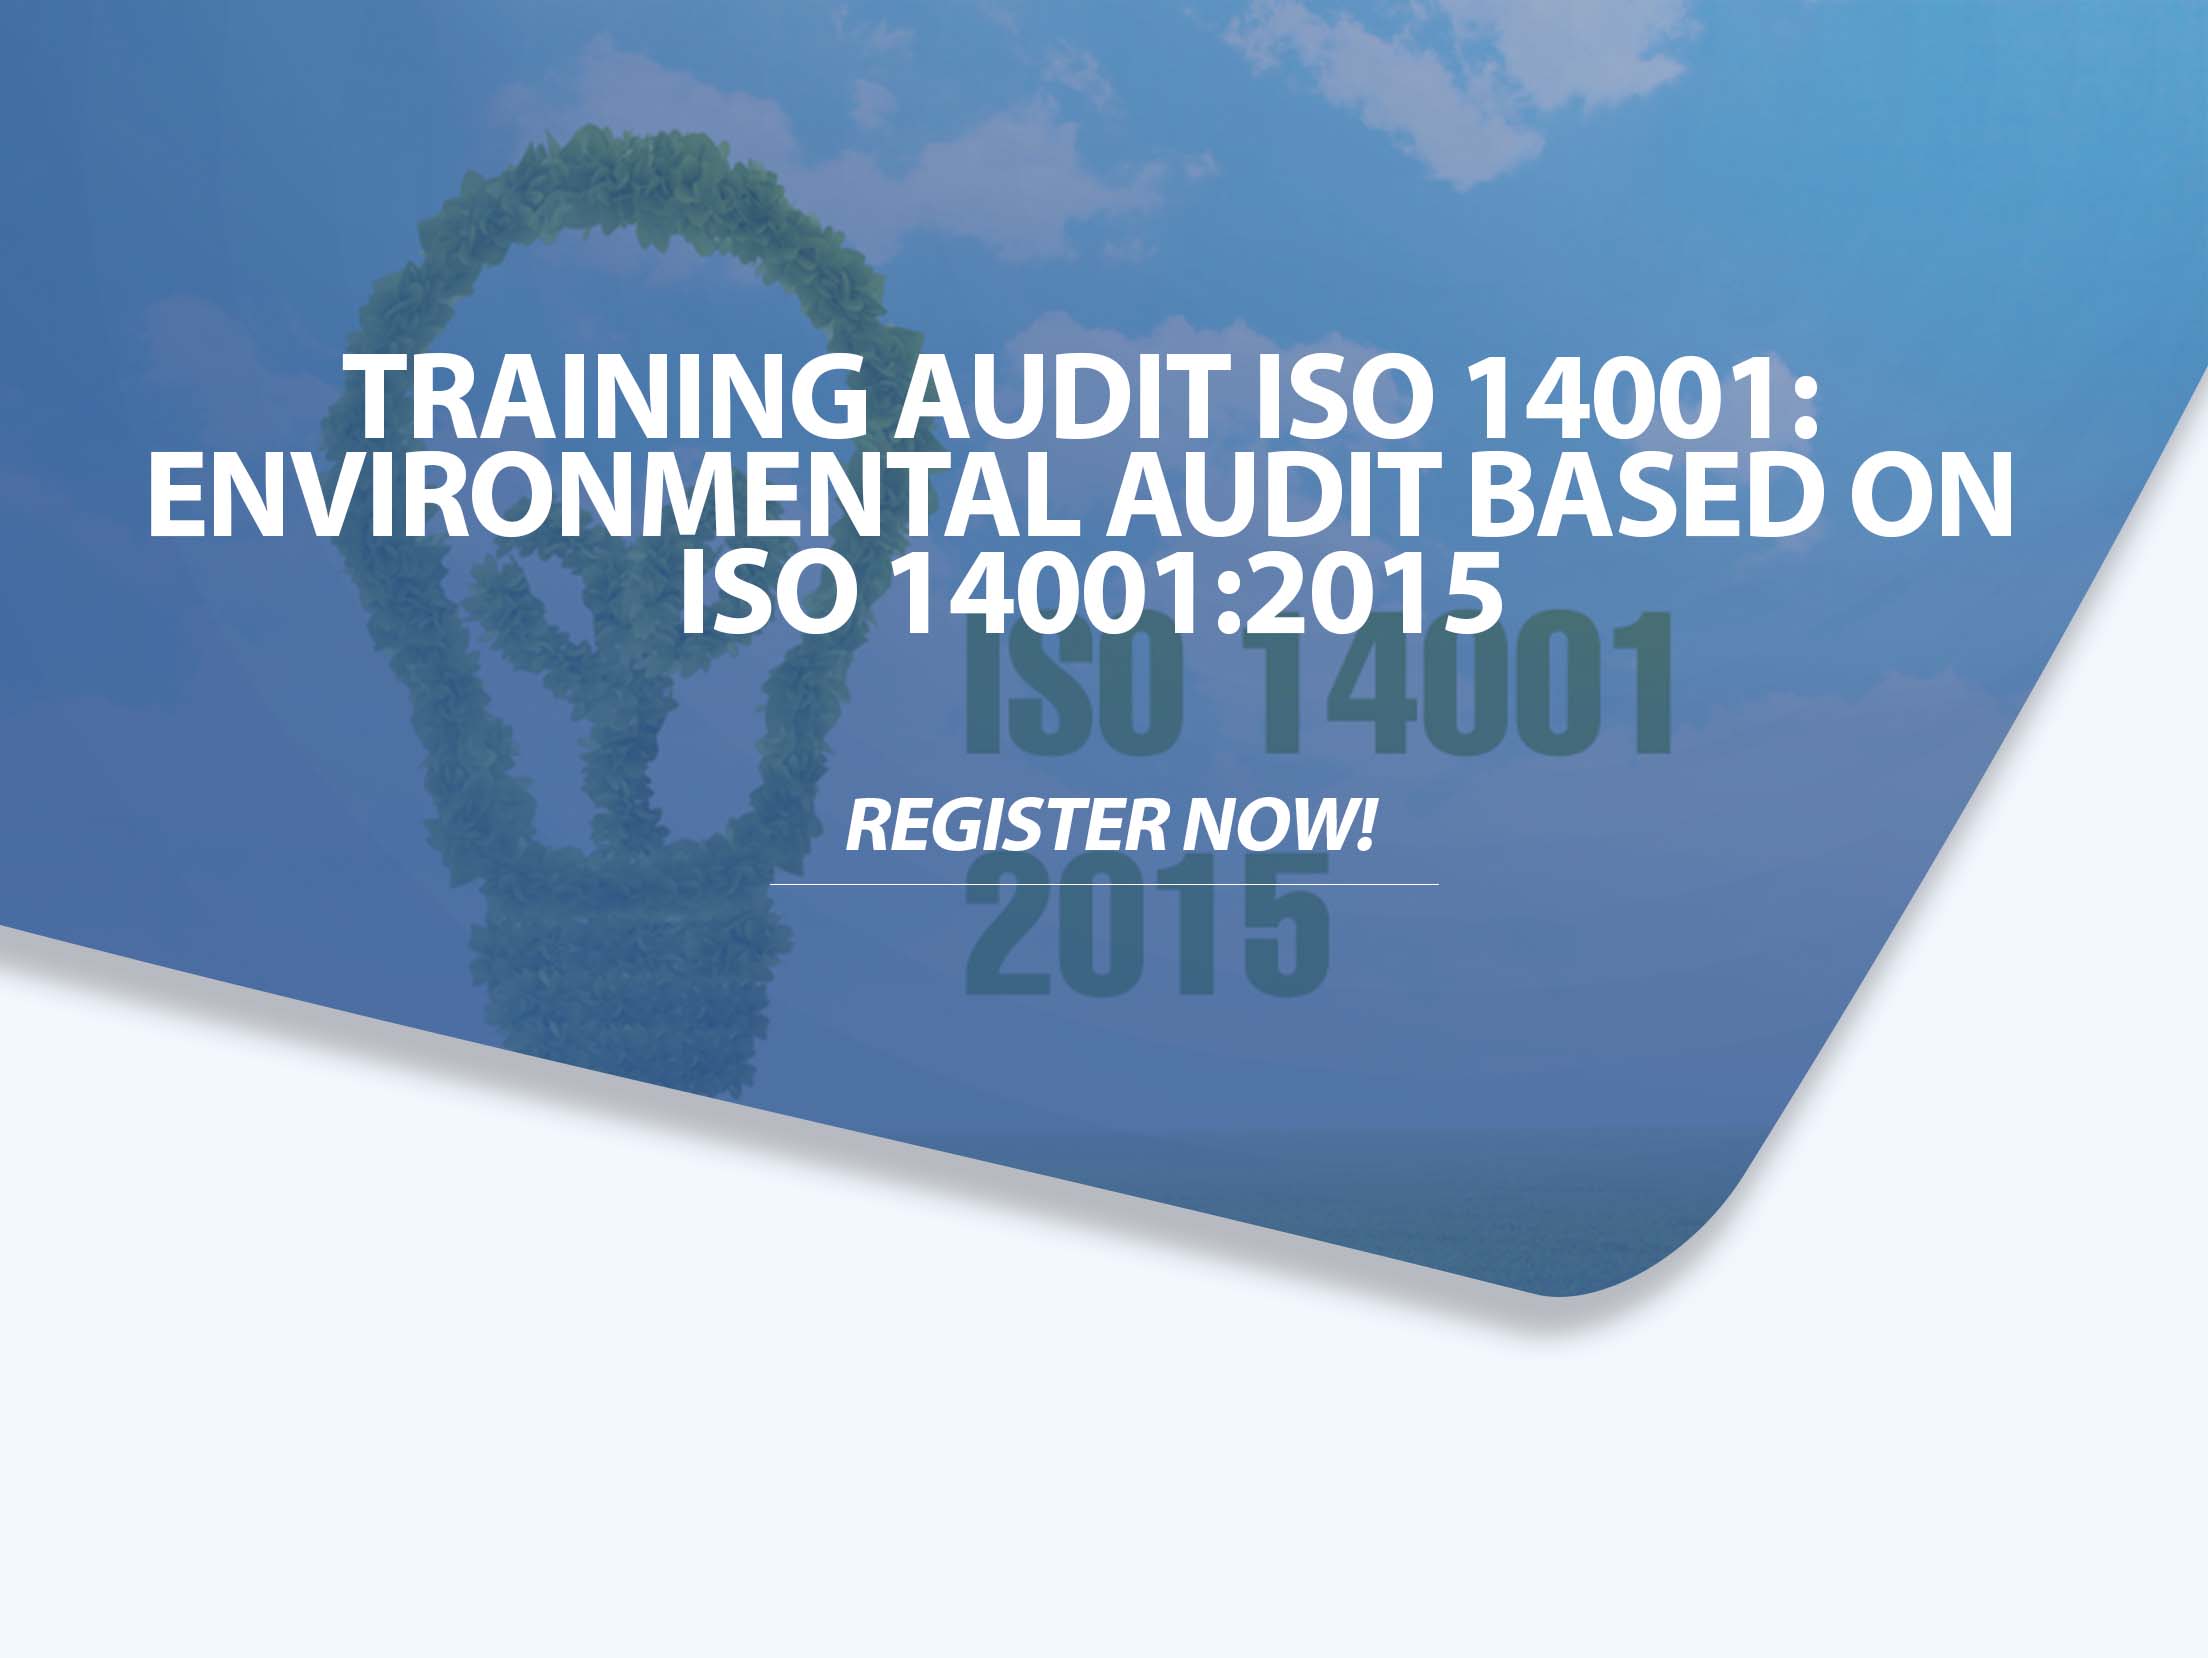 Training Audit ISO 14001 Environmental Audit based on ISO 14001 2015